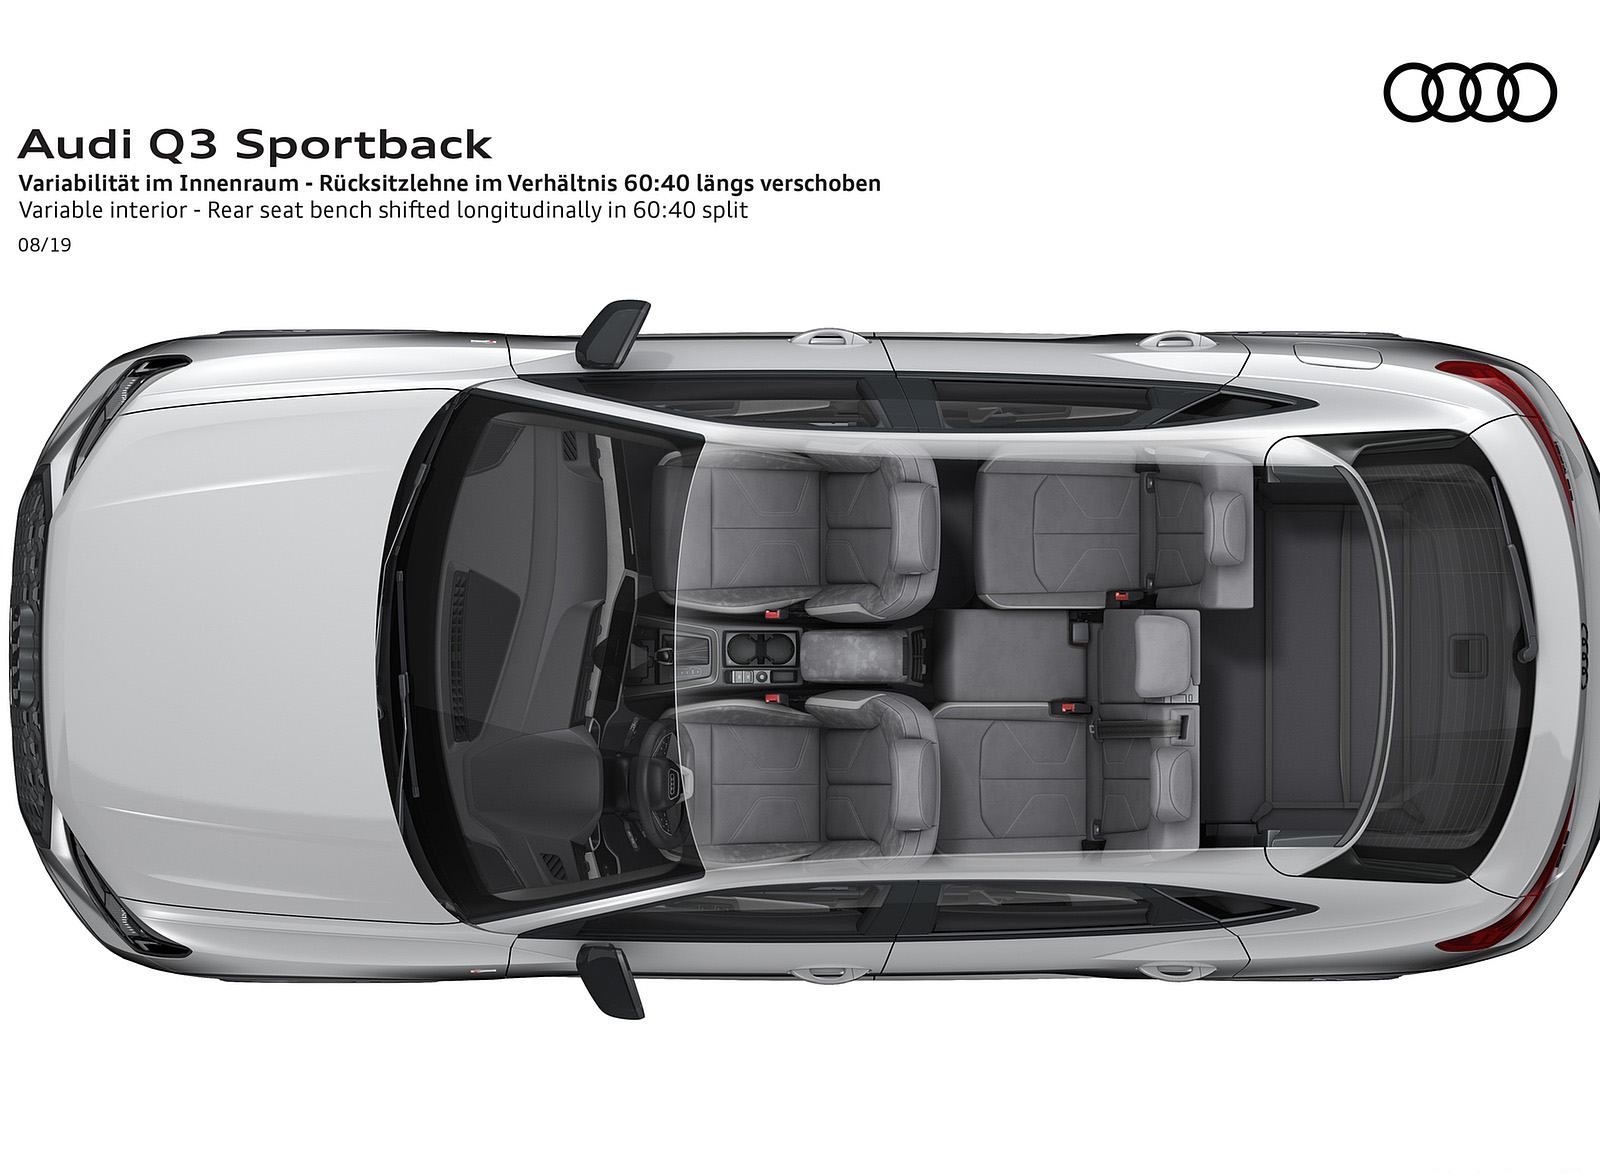 2020 Audi Q3 Sportback Variable interior Rear seat bench shifted longitudinally Wallpapers #261 of 285